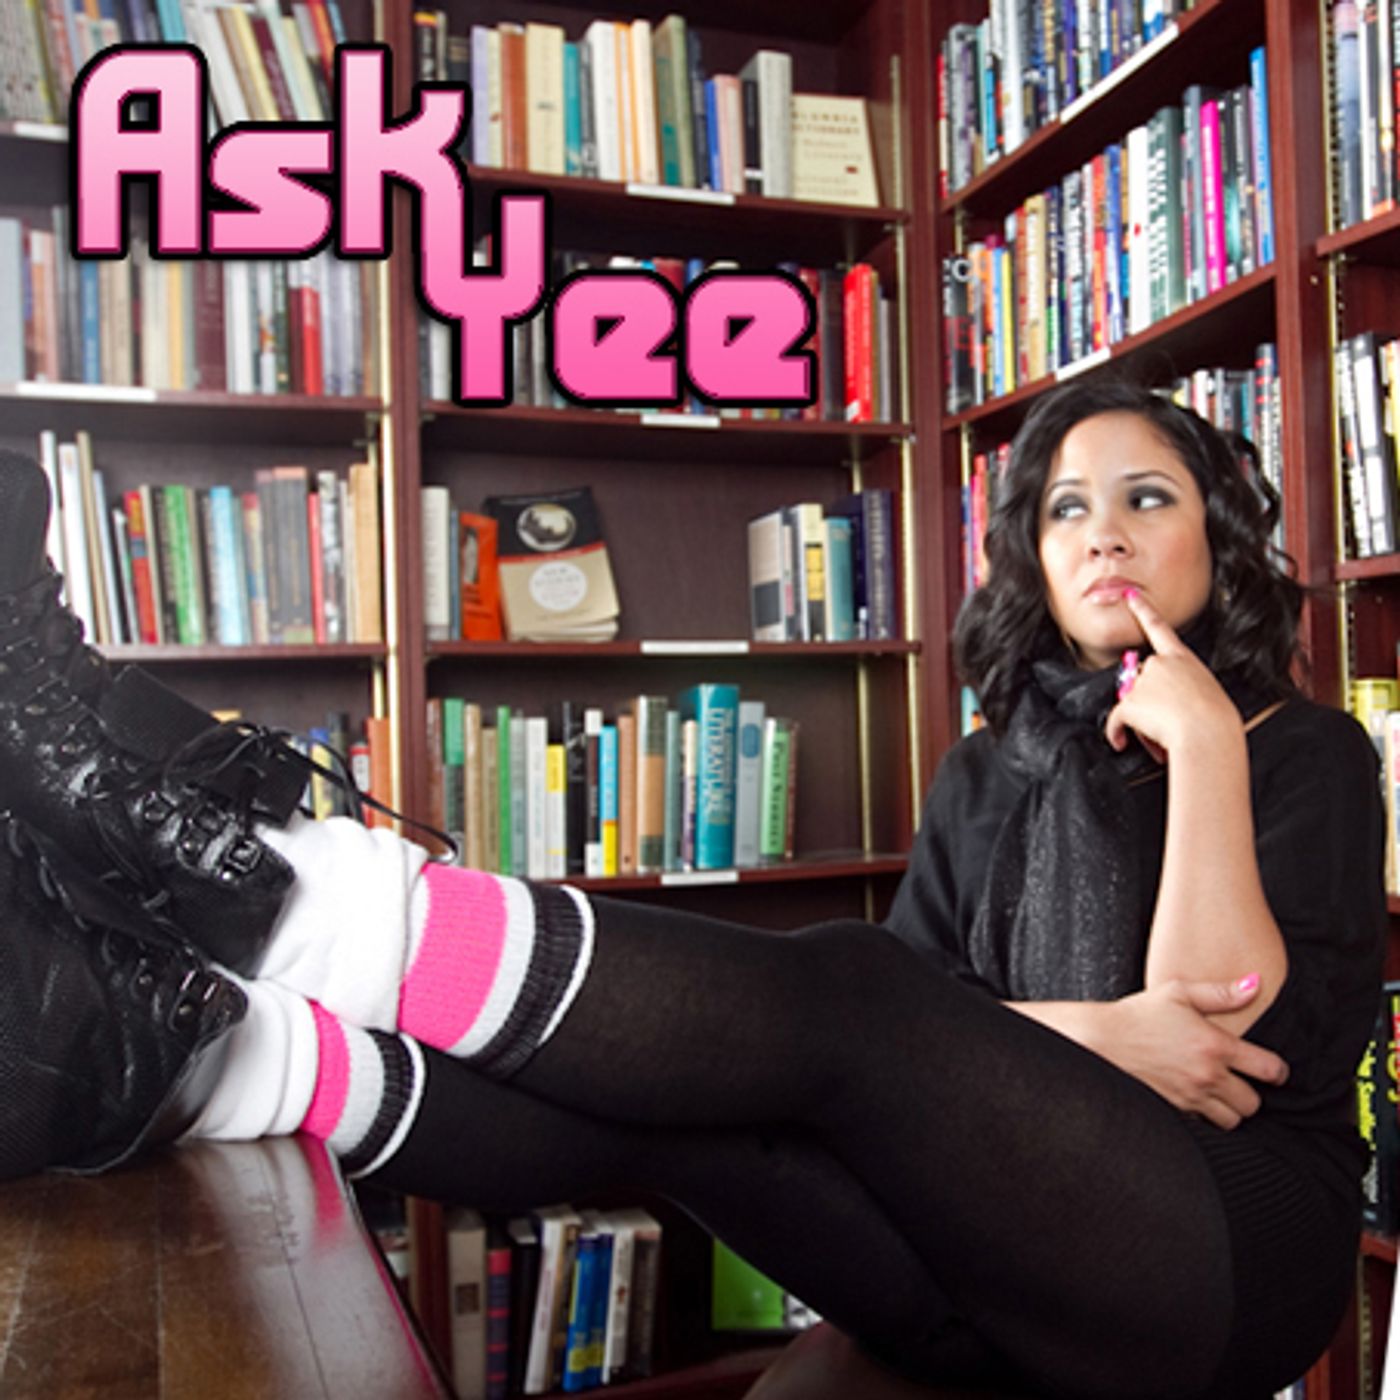 Ask Yee - Ask Charlamagne & Envy